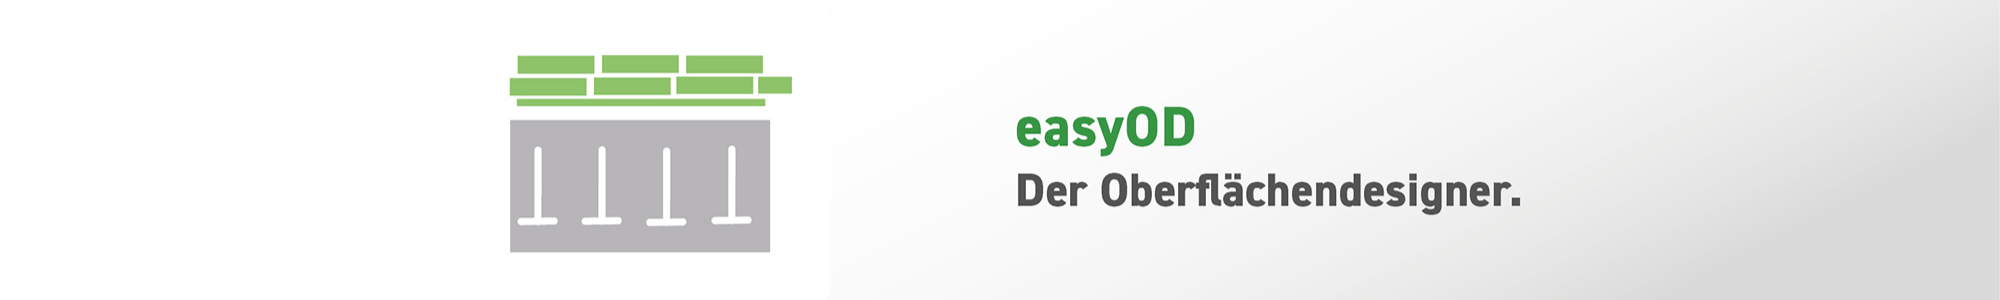 easyOD - isl-kocher GmbH